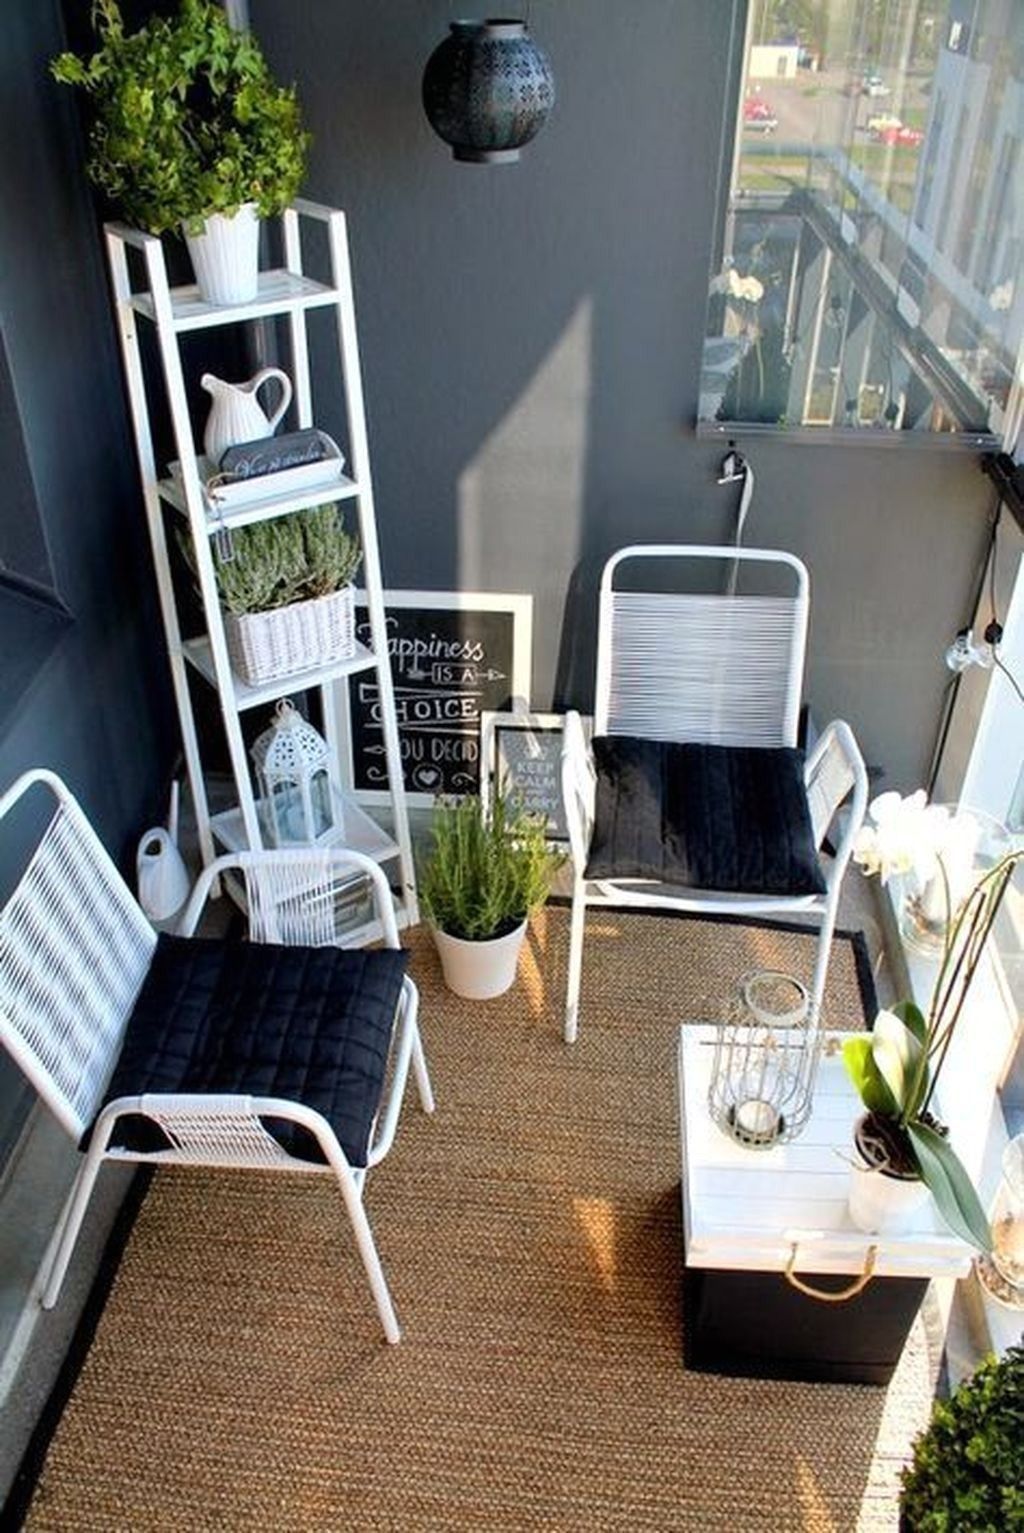 32 BEST BALCONY DECOR IDEAS - Home/Decor/Diy/Design -   10 plants balcony ideas